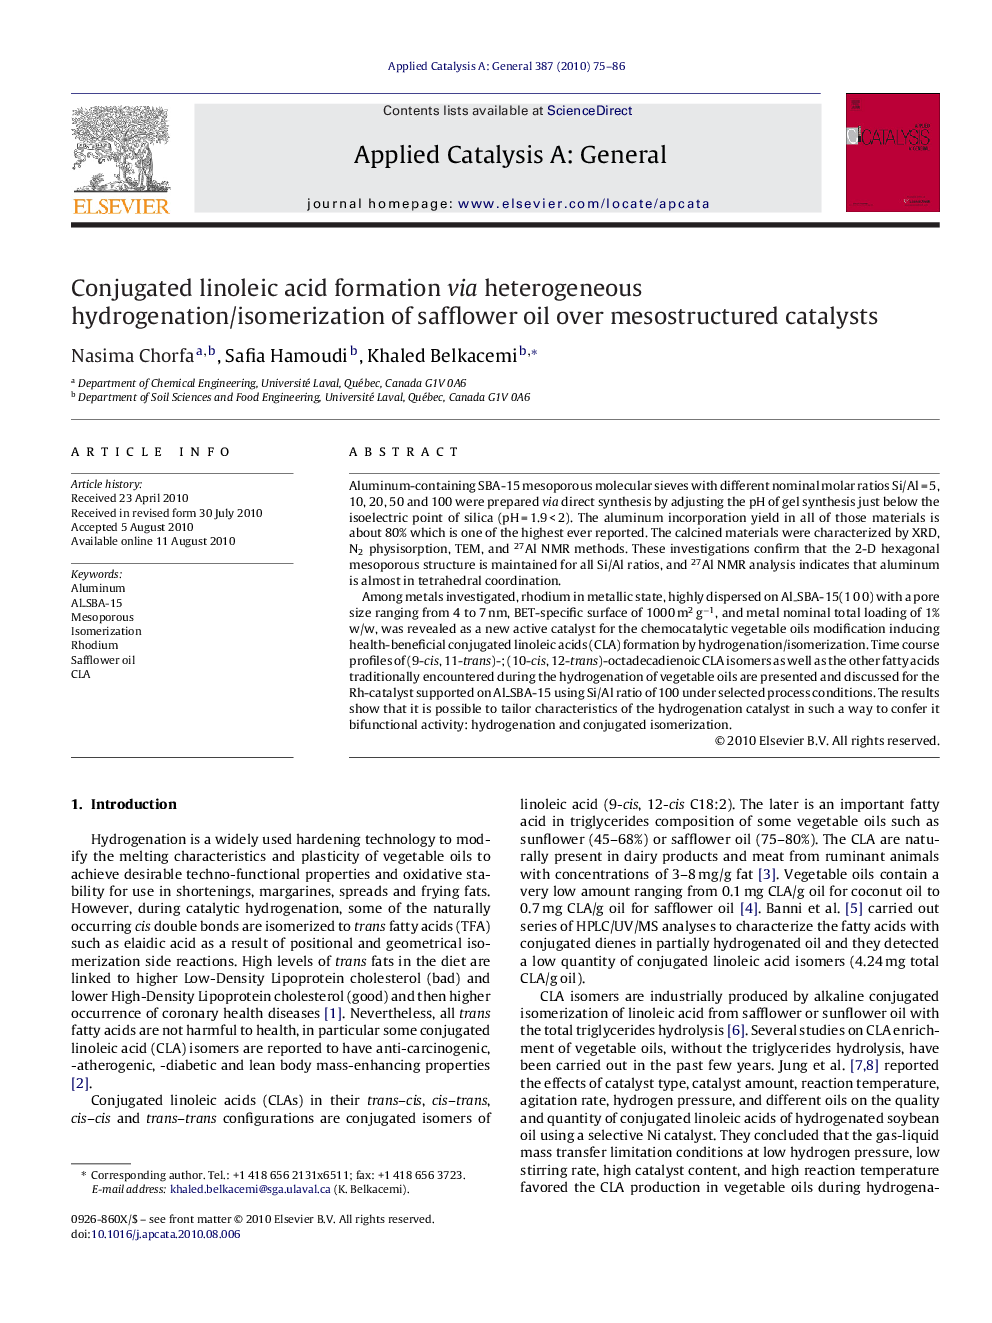 Conjugated linoleic acid formation via heterogeneous hydrogenation/isomerization of safflower oil over mesostructured catalysts